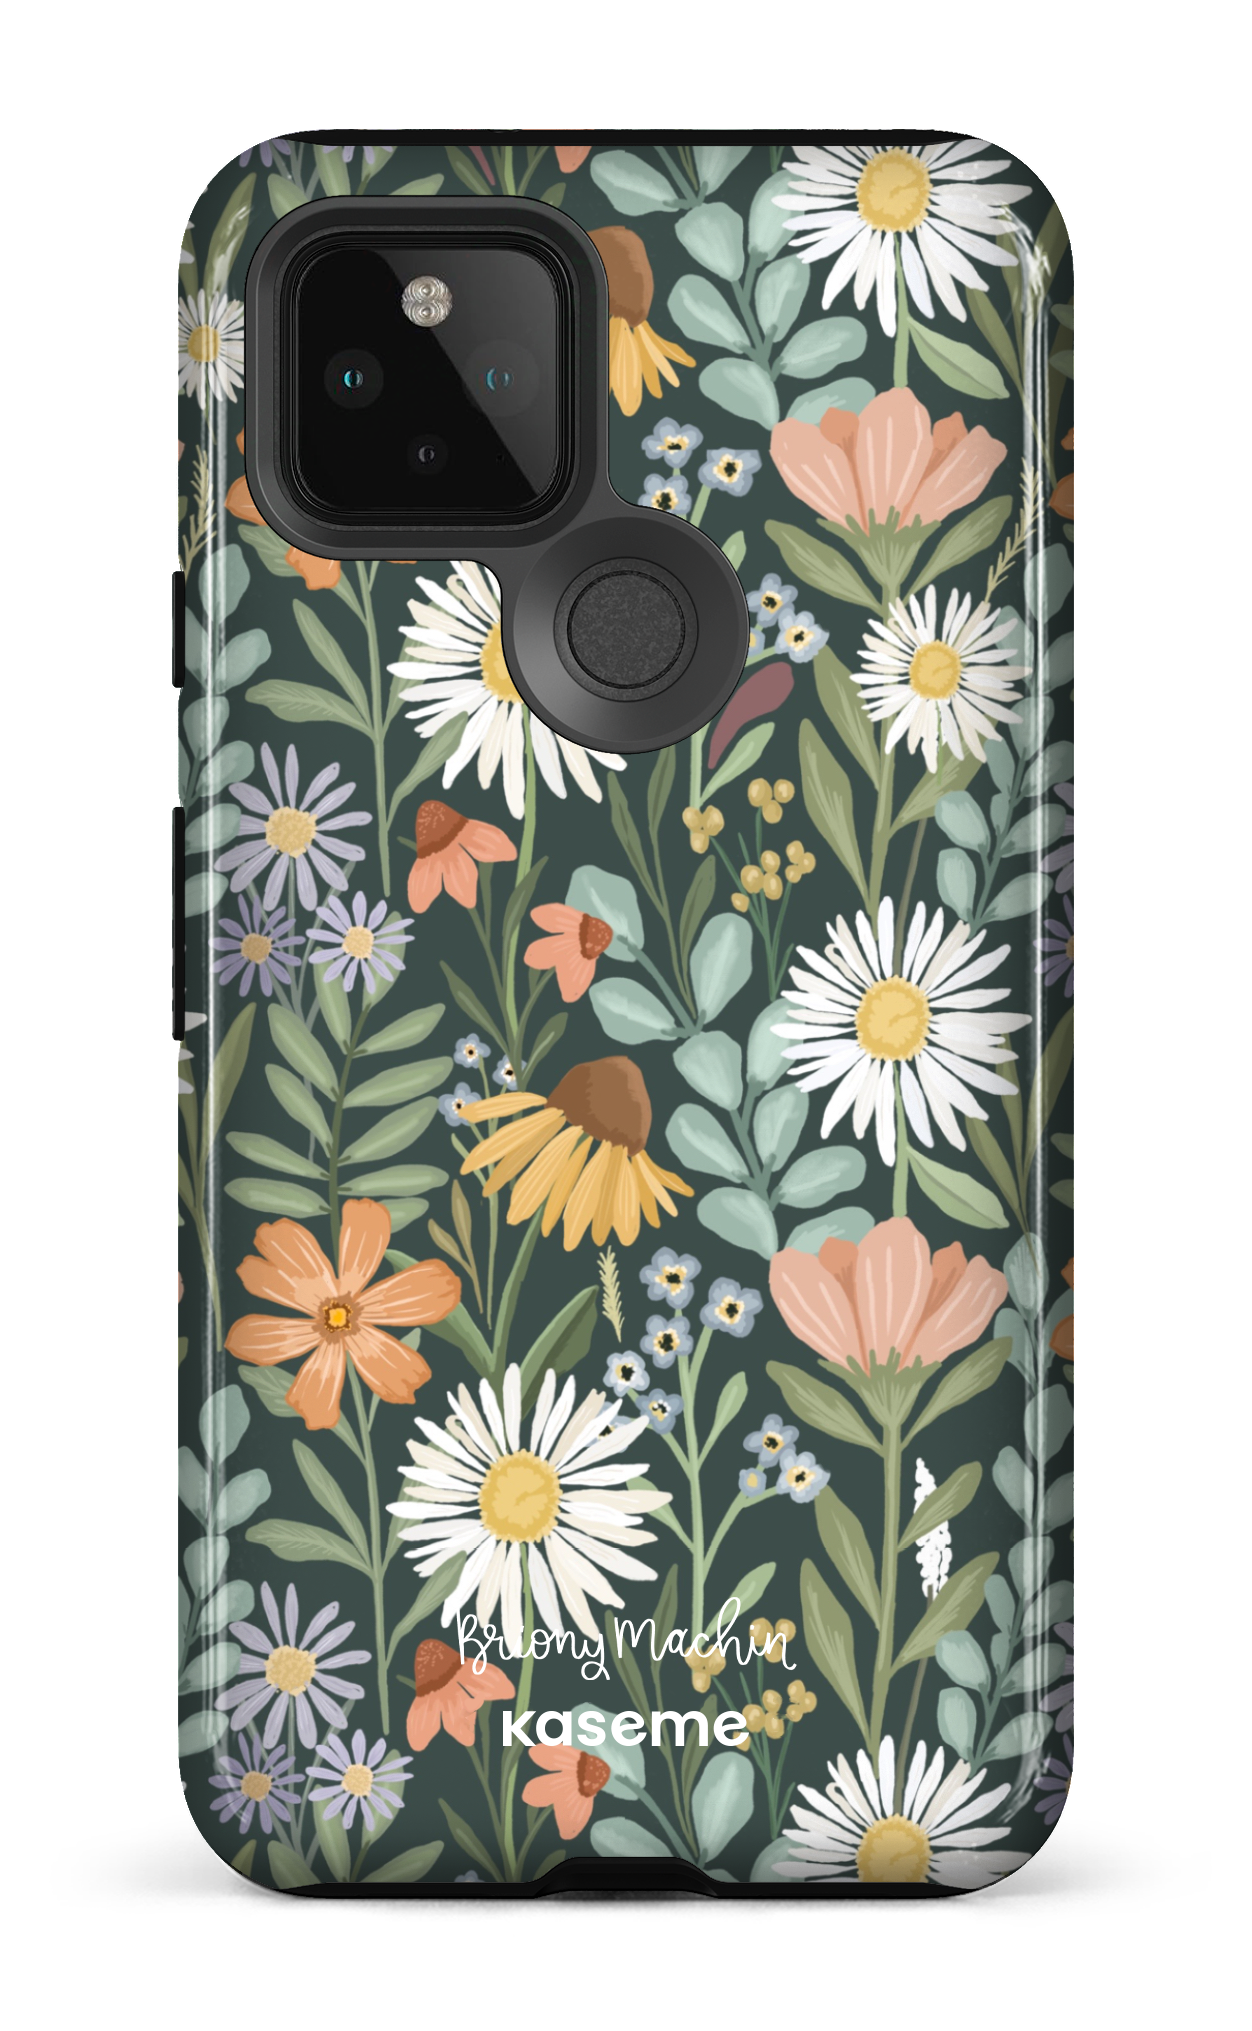 Sending Flowers Green by Briony Machin - Google Pixel 5